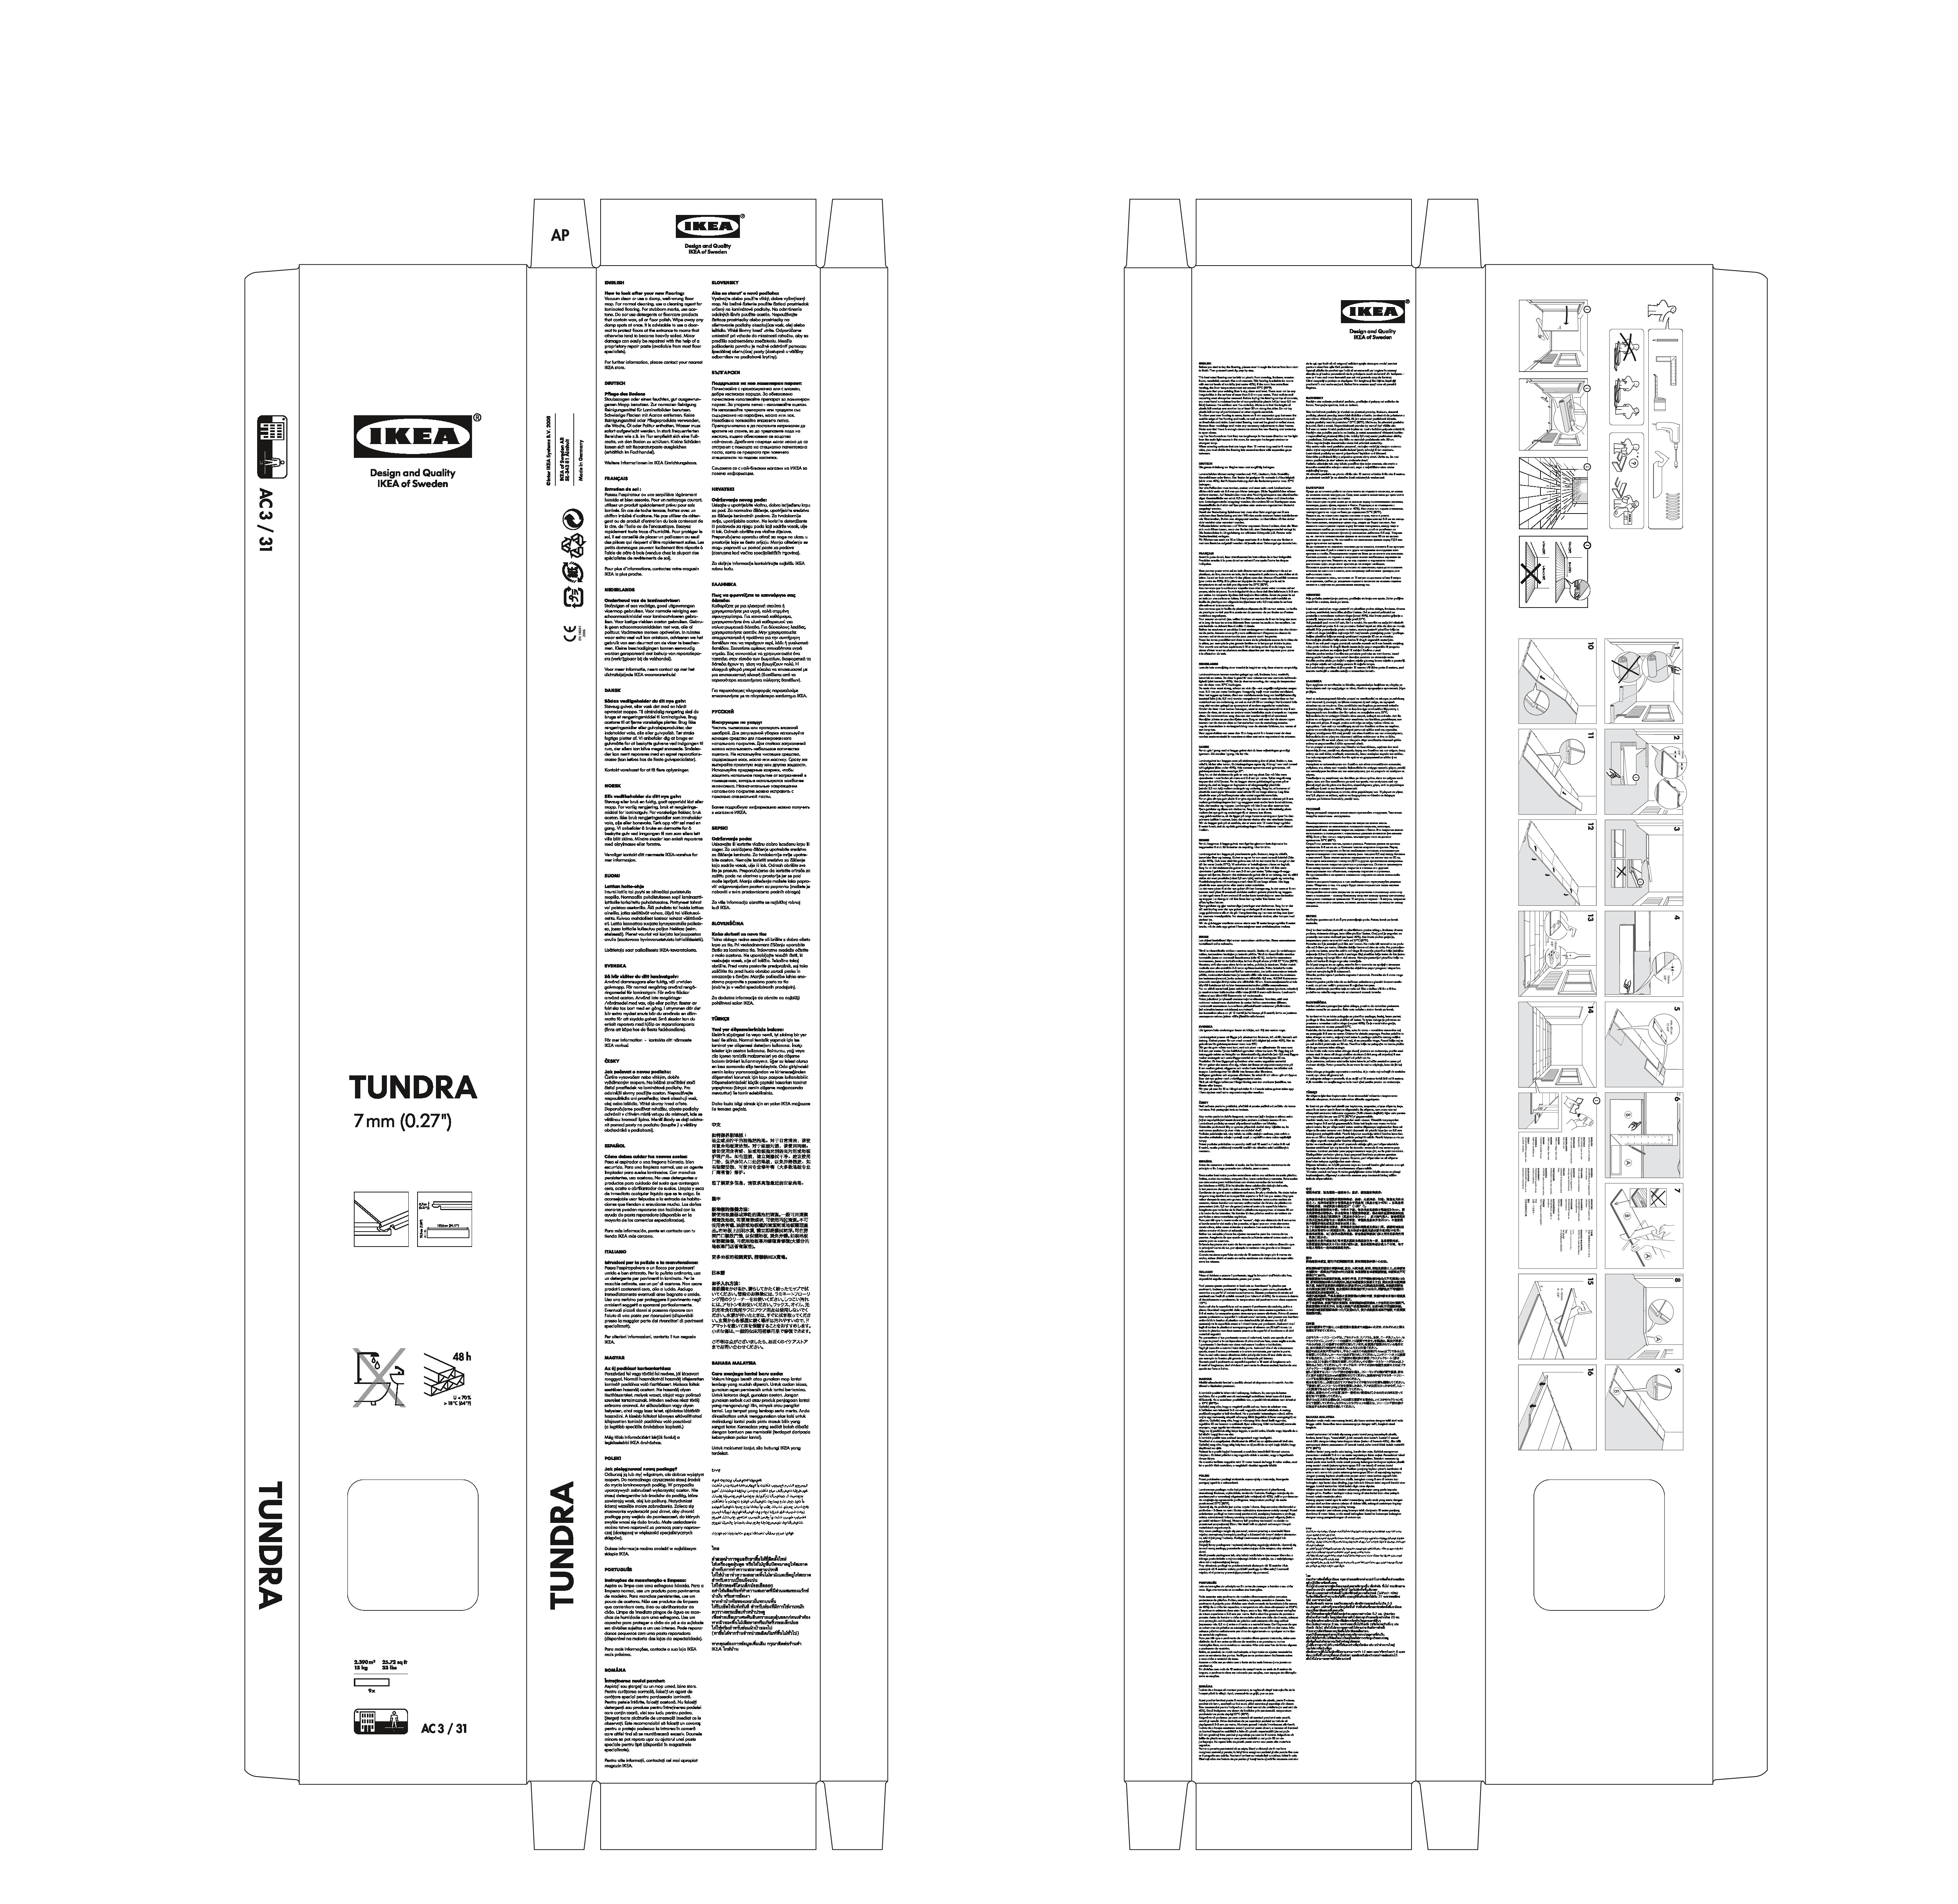 Tundra Laminated Flooring Maple Effect, Ikea Tundra Flooring Installation Instructions